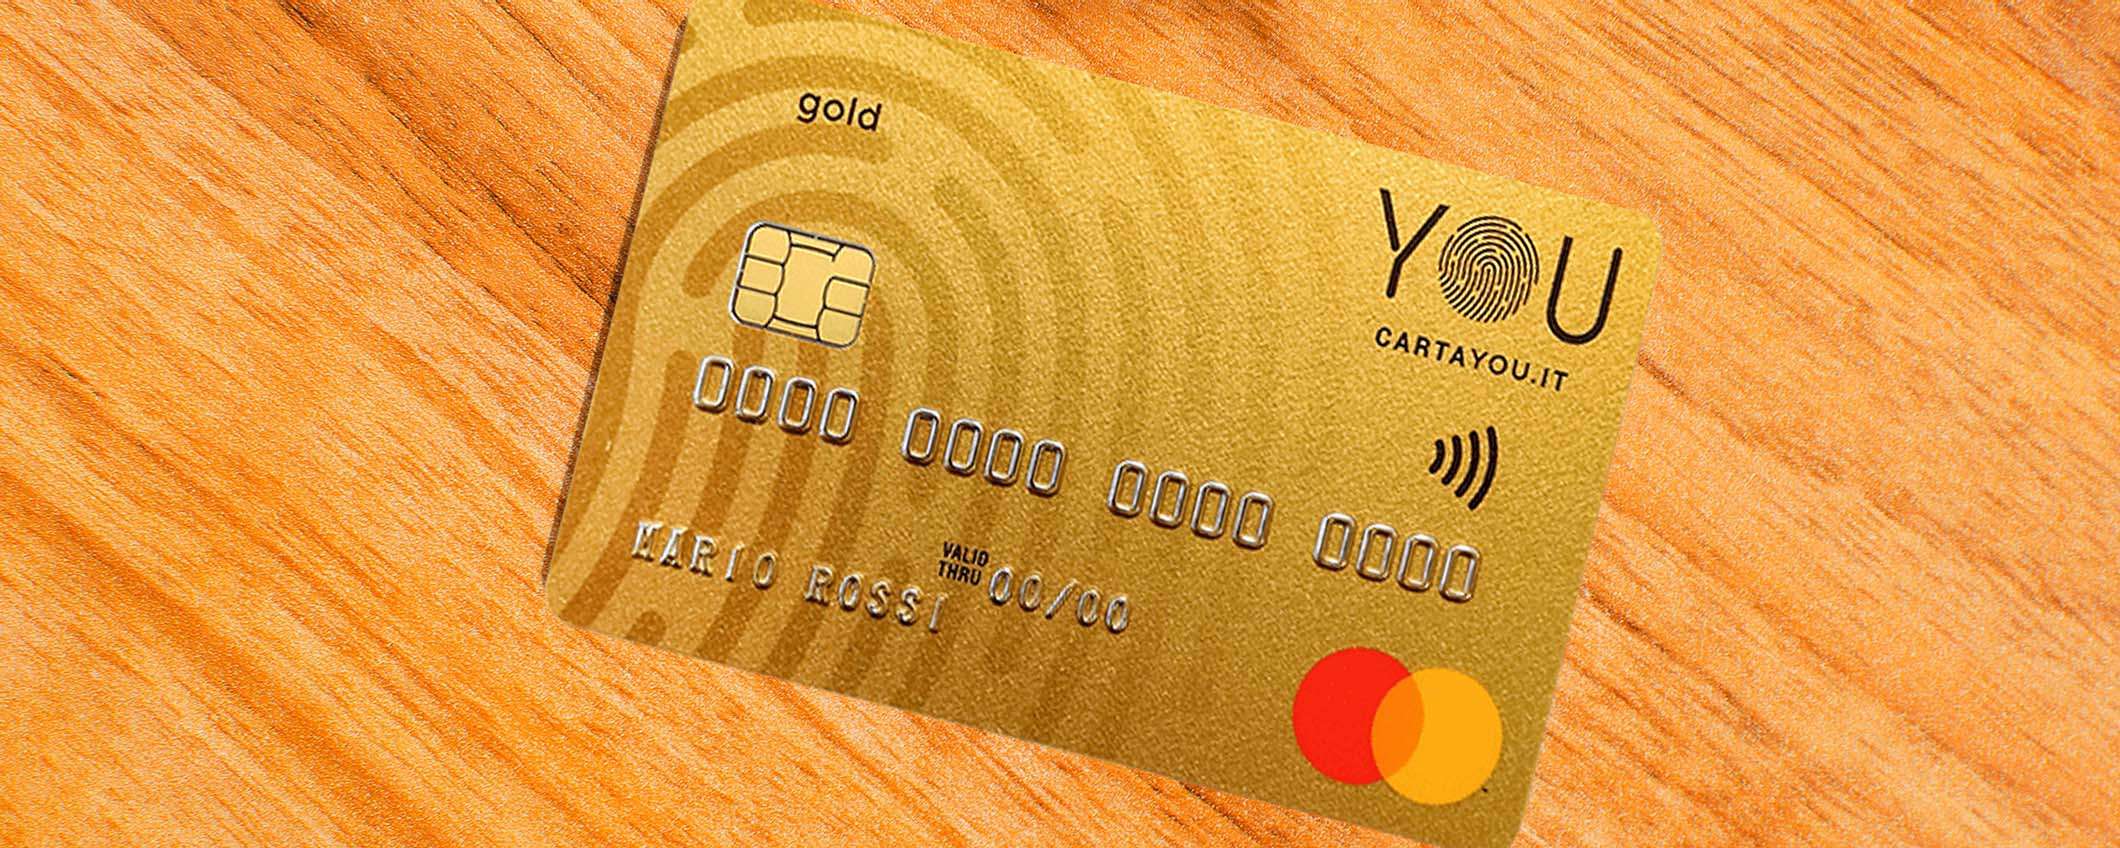 Carta YOU: la carta di credito gratis dai vantaggi esclusivi